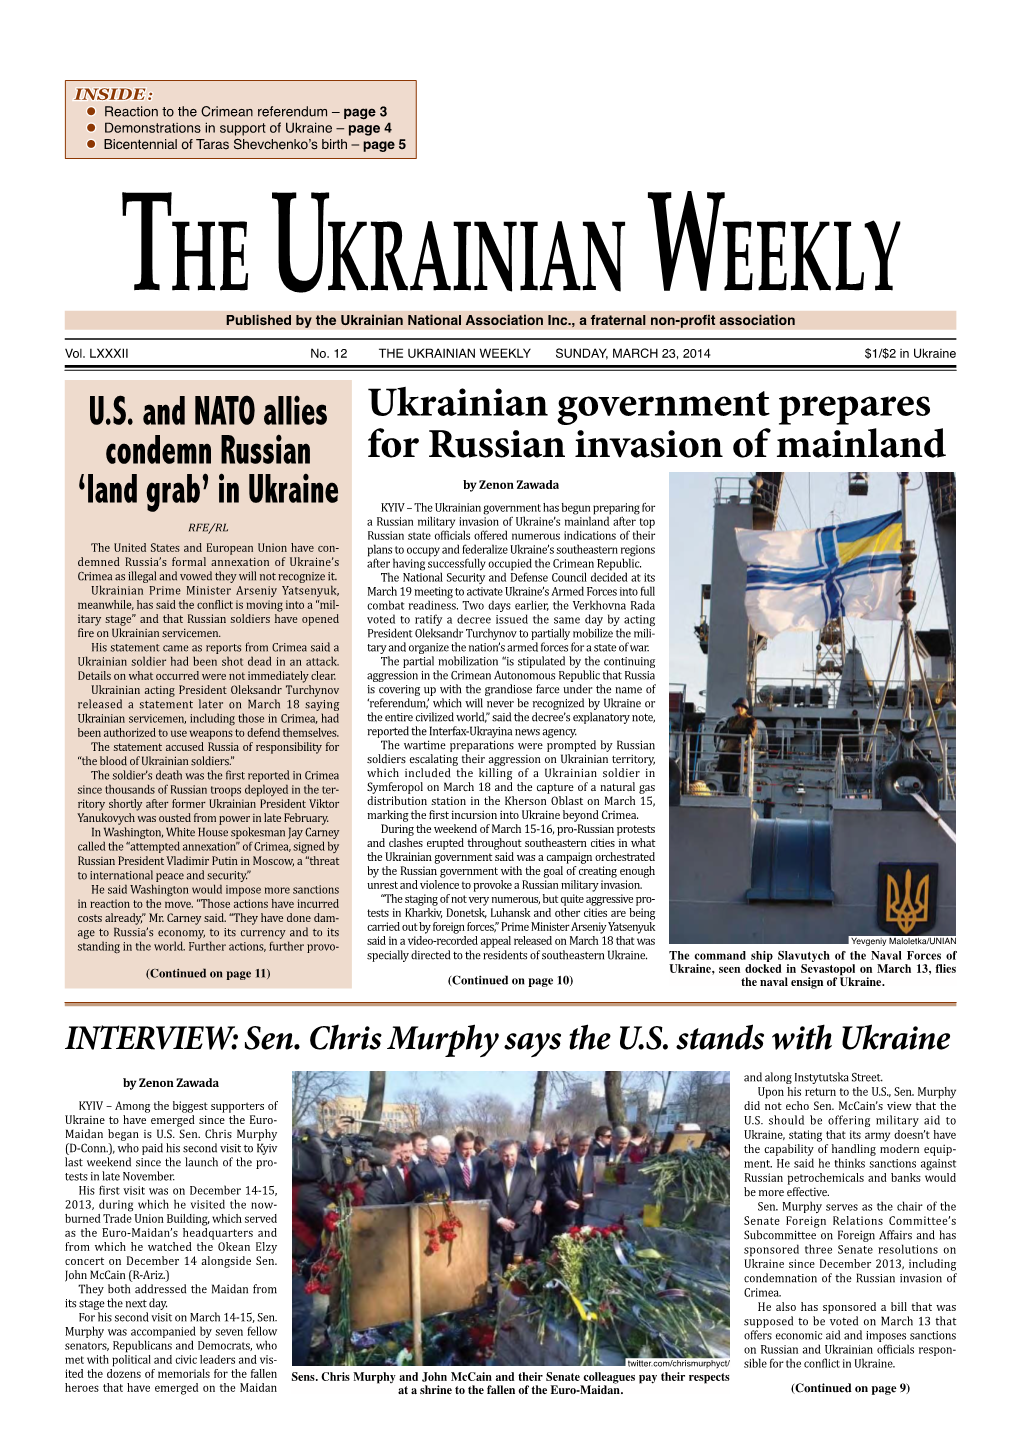 The Ukrainian Weekly 2014, No.12